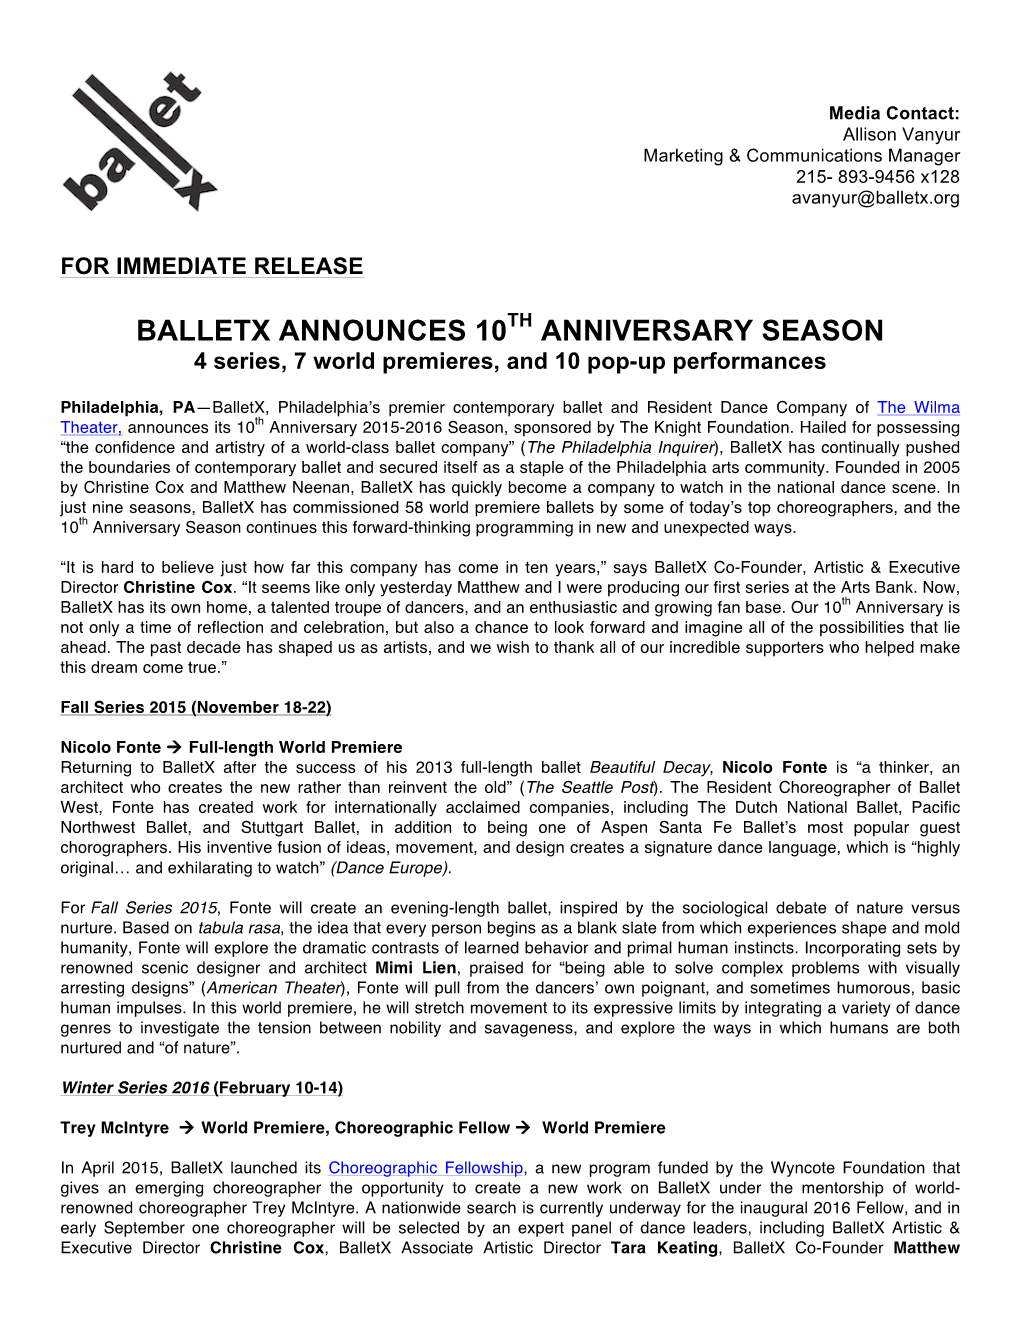 Balletx Announces 10 Anniversary Season